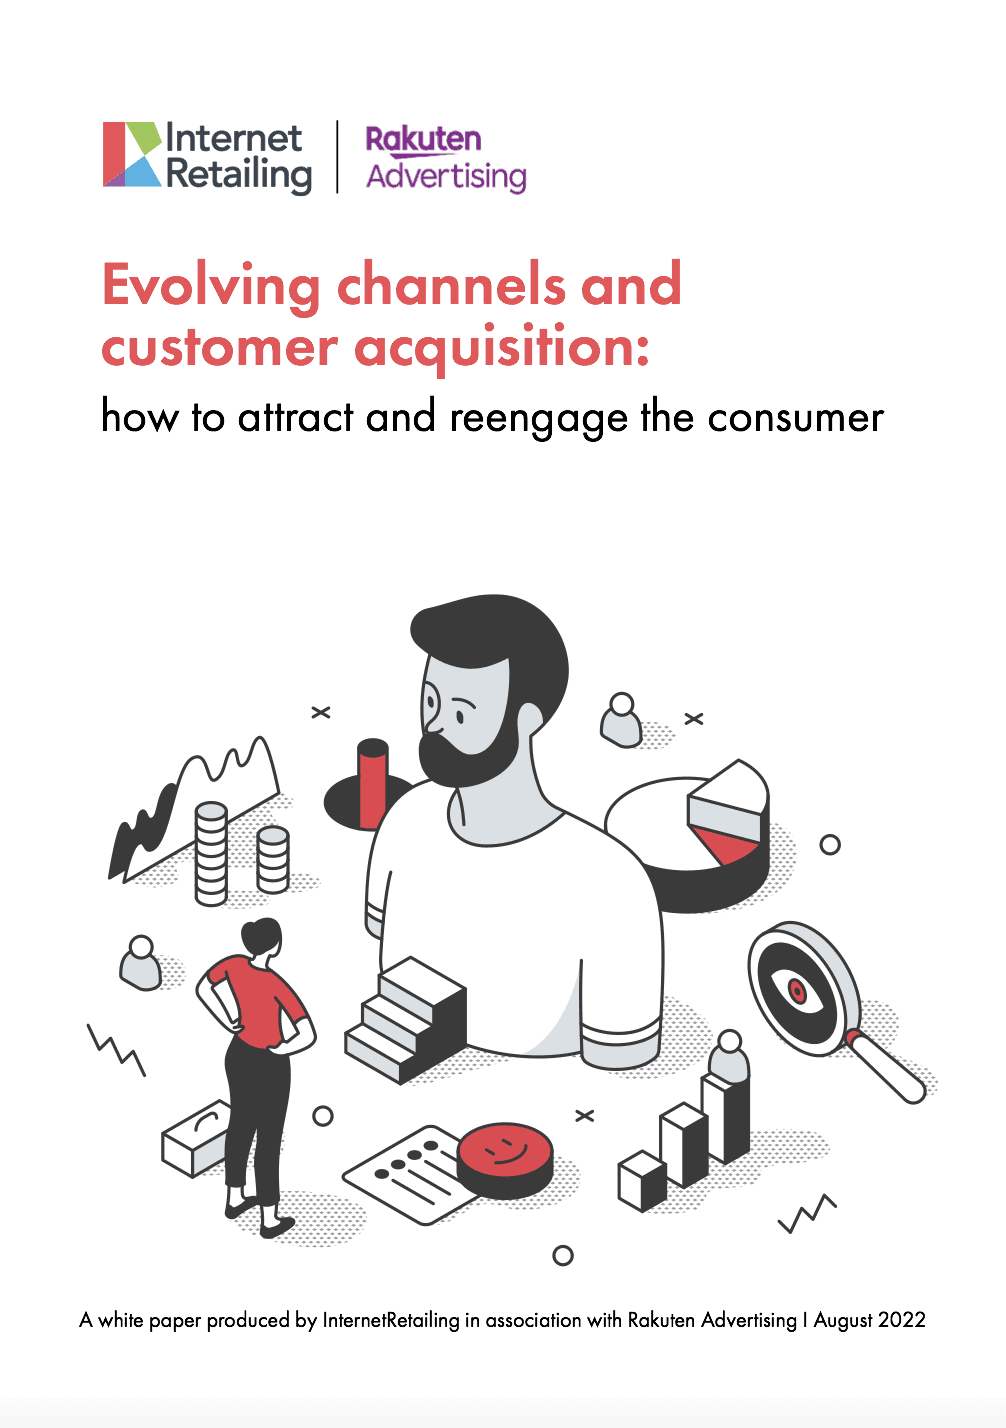 Rakuten Advertising: Evolving channels and customer acquisition